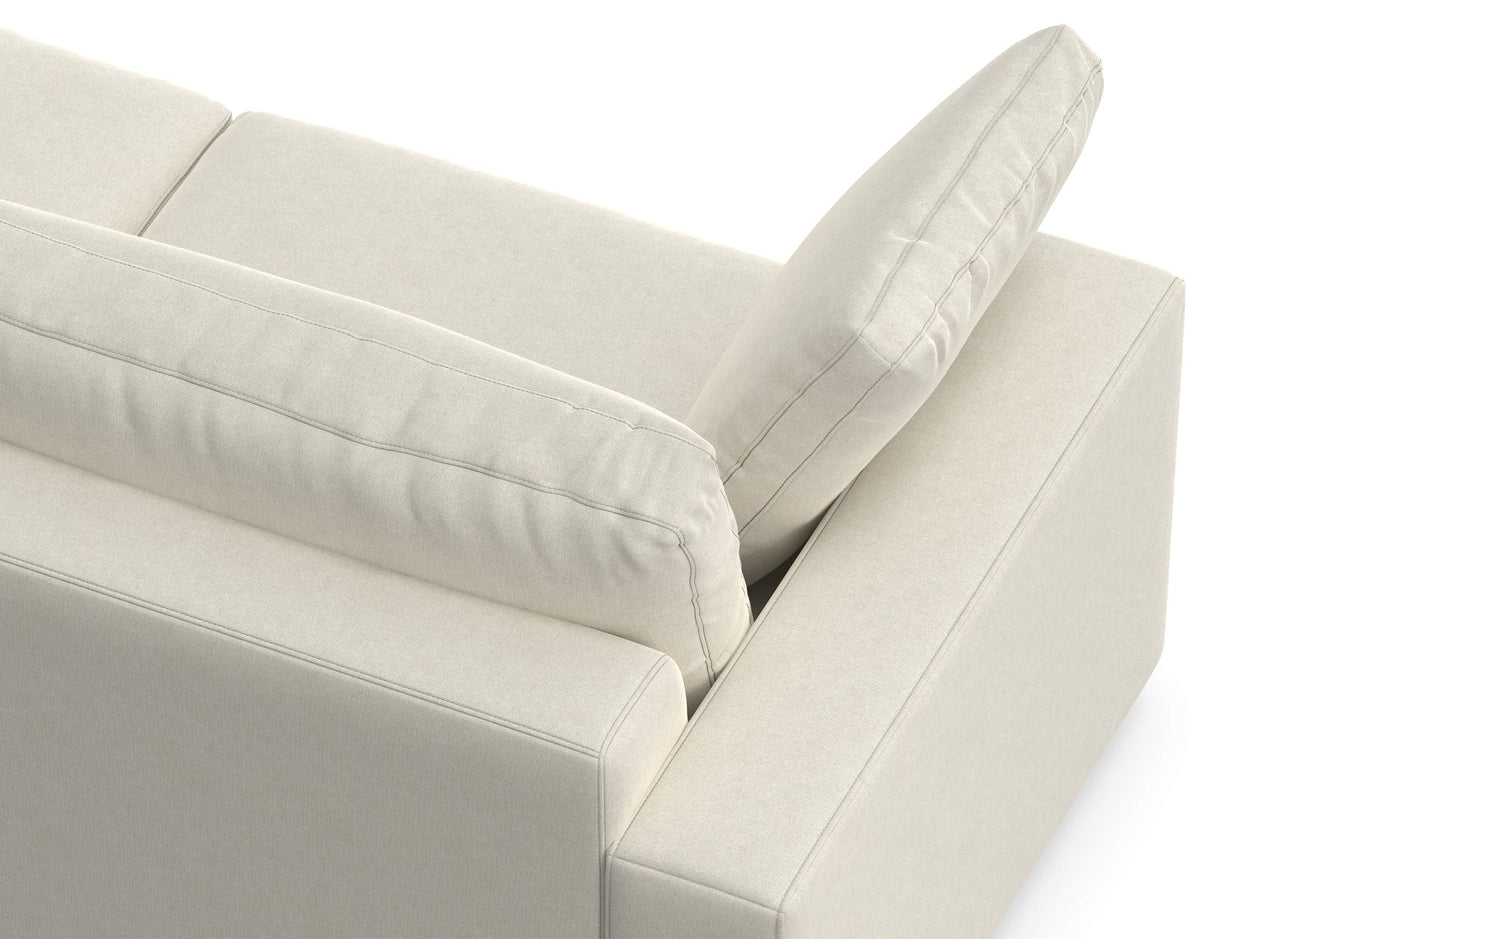 Cream Performance Fabric | Charlie 78 inch Deep Seater Sofa